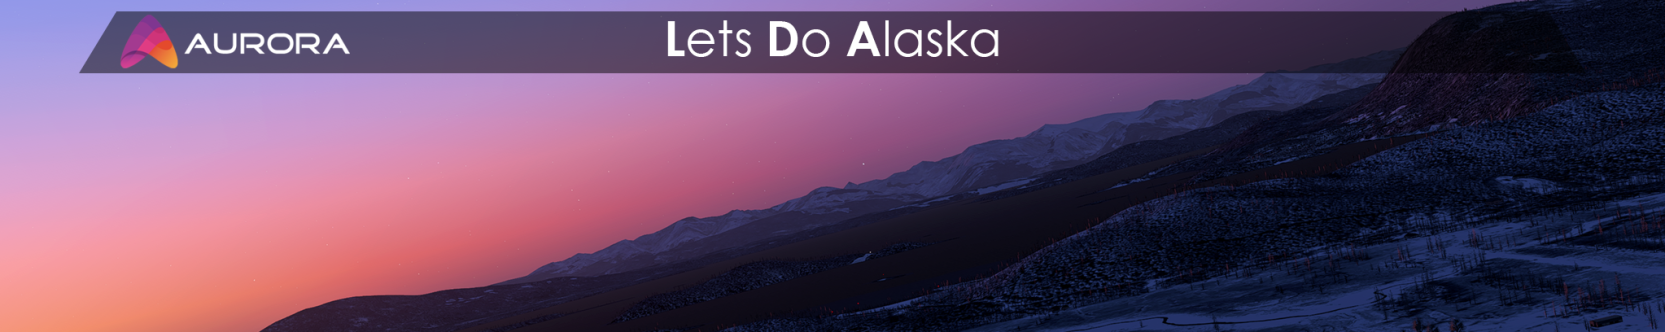 Let's do Alaska